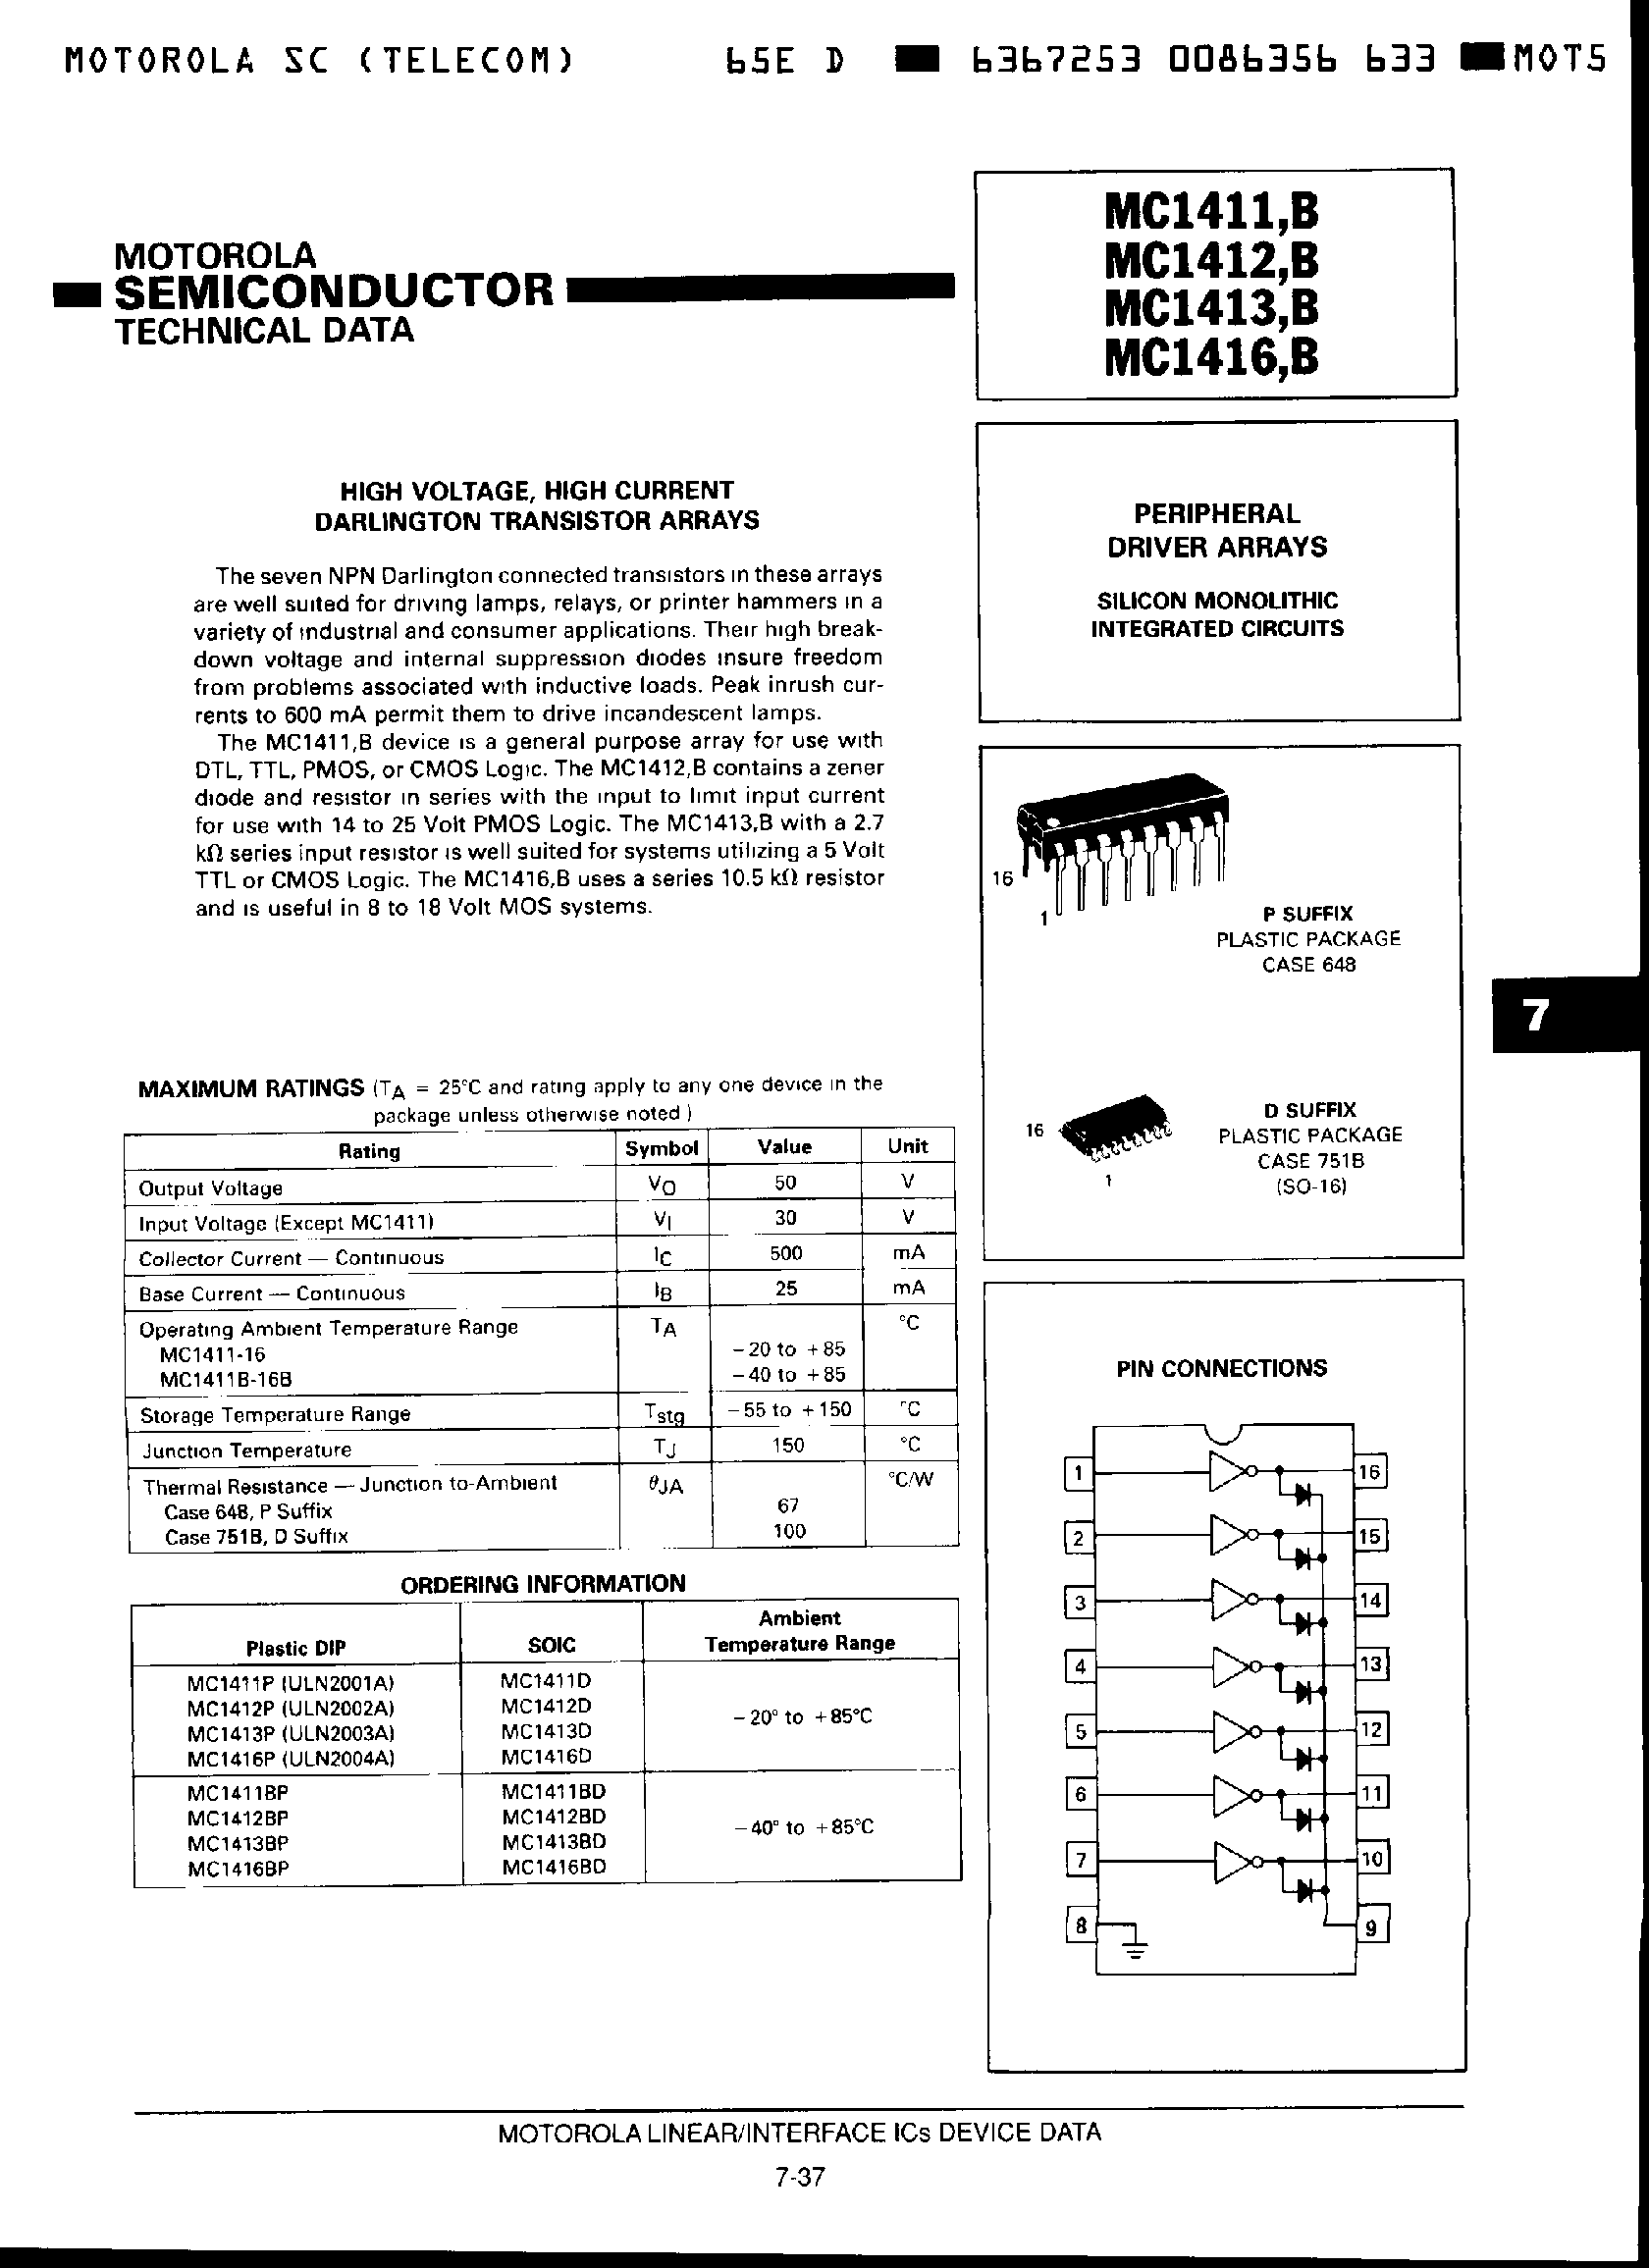 Datasheet MC1411P - PERIPHERAL DRIVER ARRAYS page 1